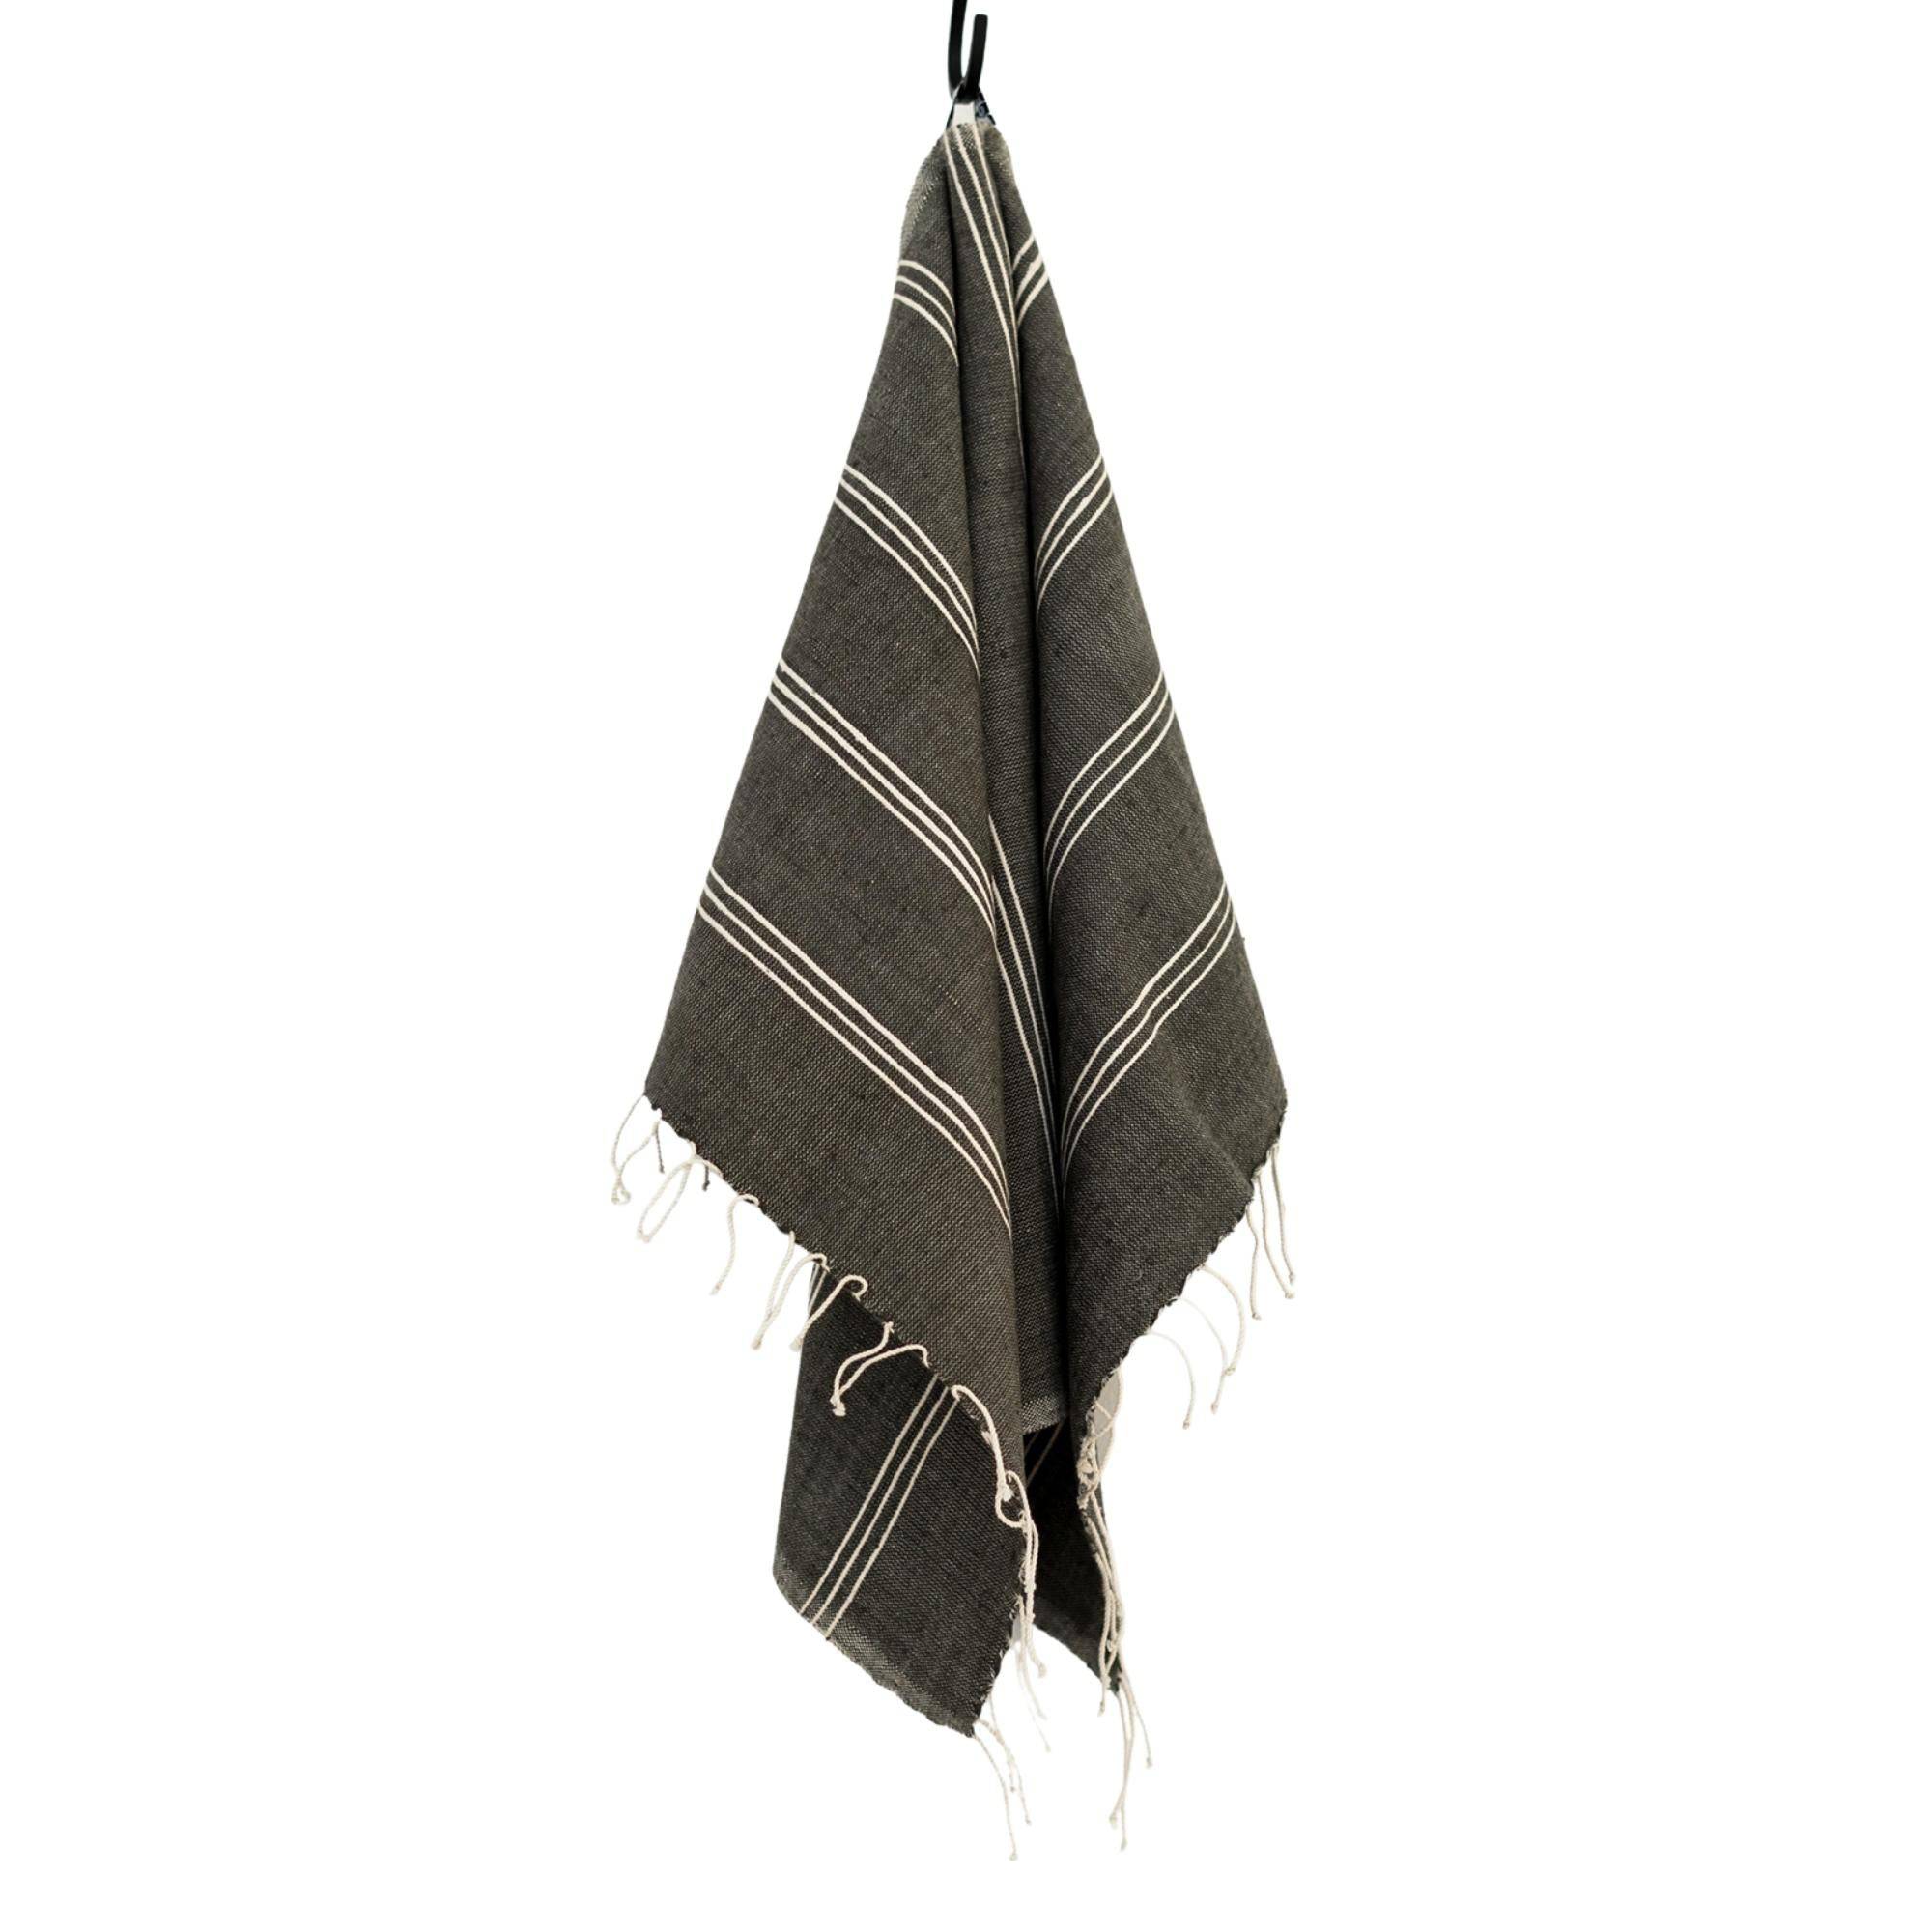 Tihku Towel - THAT COOL LIVING